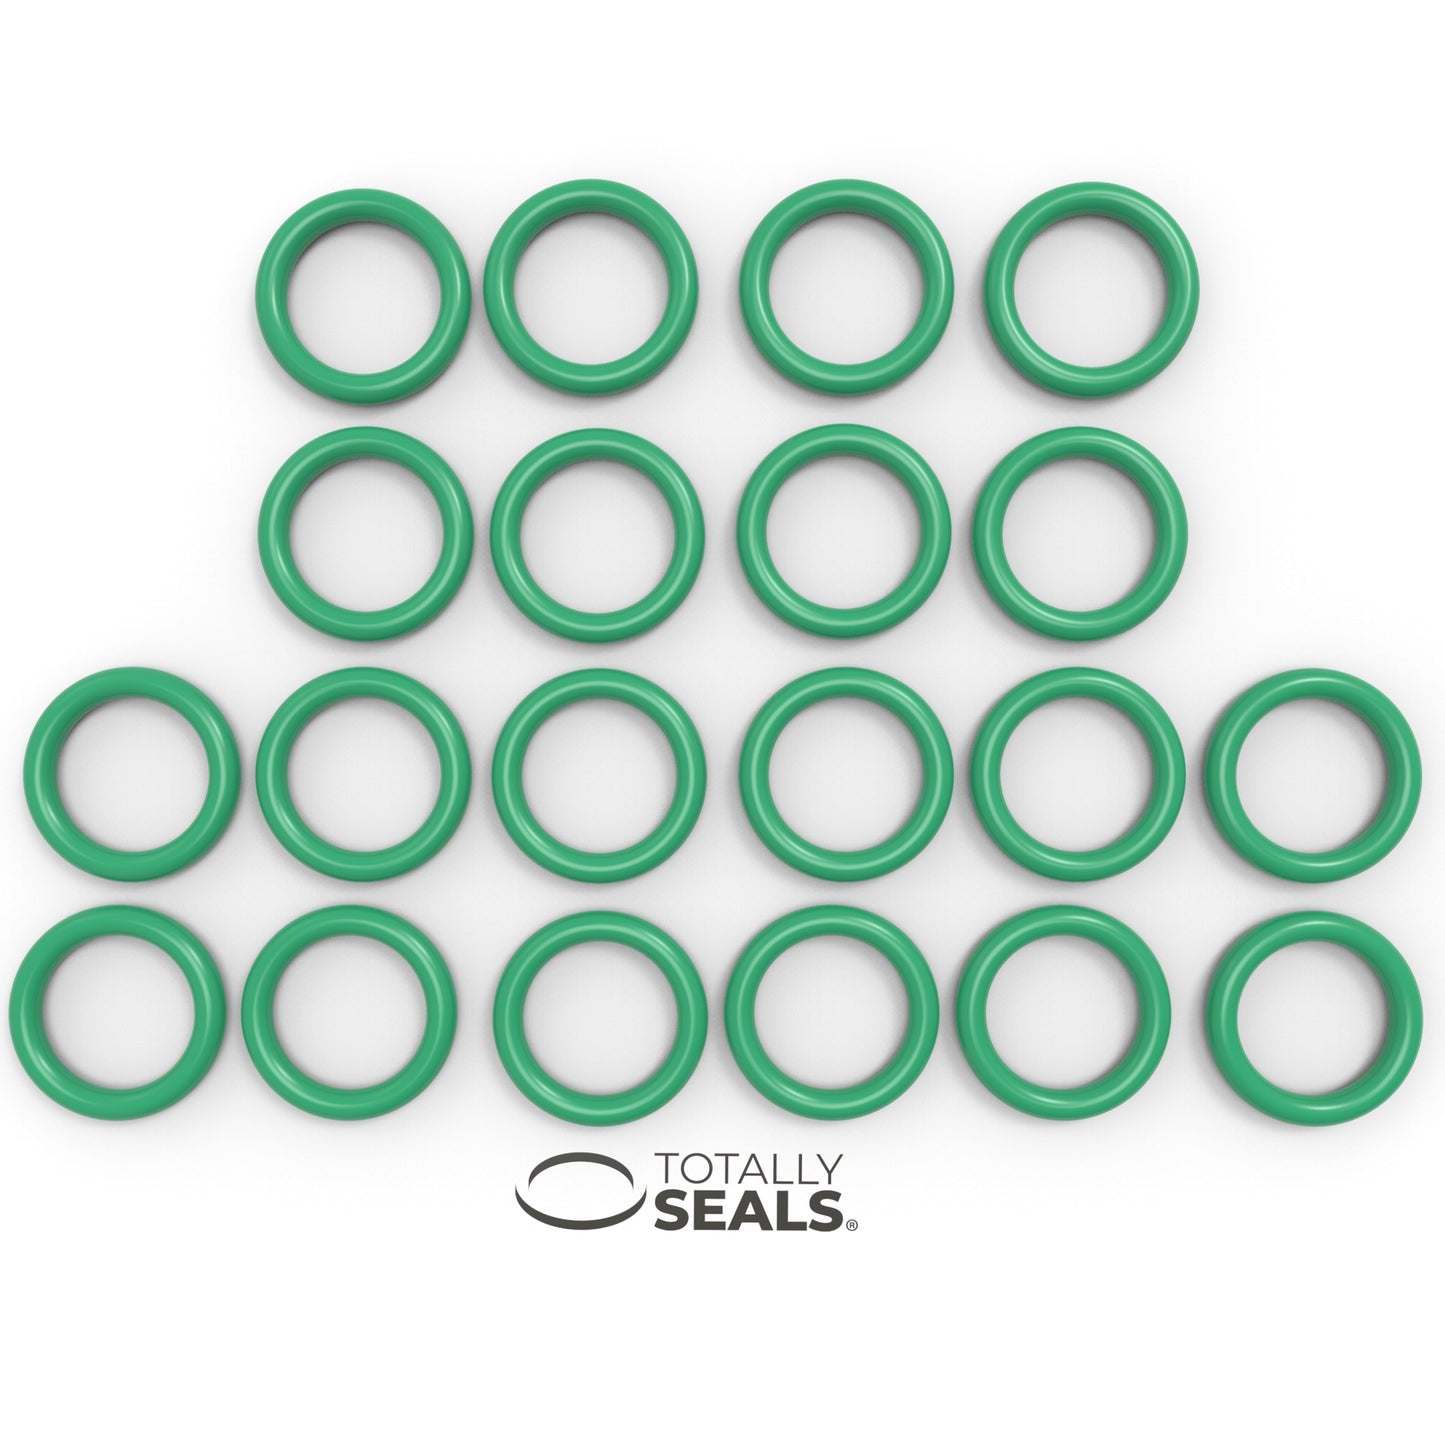 7mm x 2.5mm (12mm OD) FKM (Viton™) O-Rings - Totally Seals®